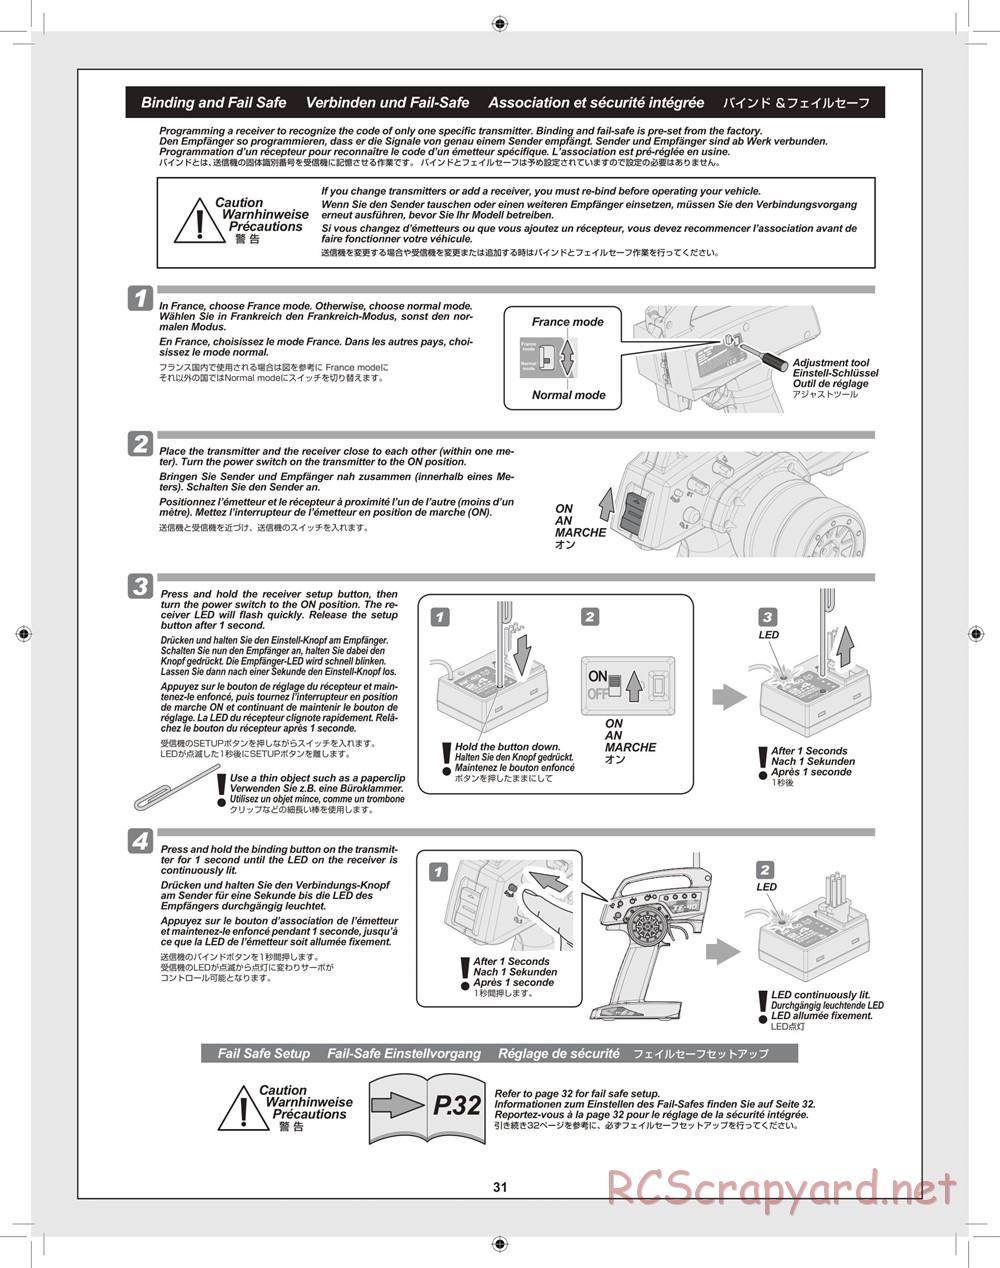 HPI - Blitz Waterproof - Manual - Page 31